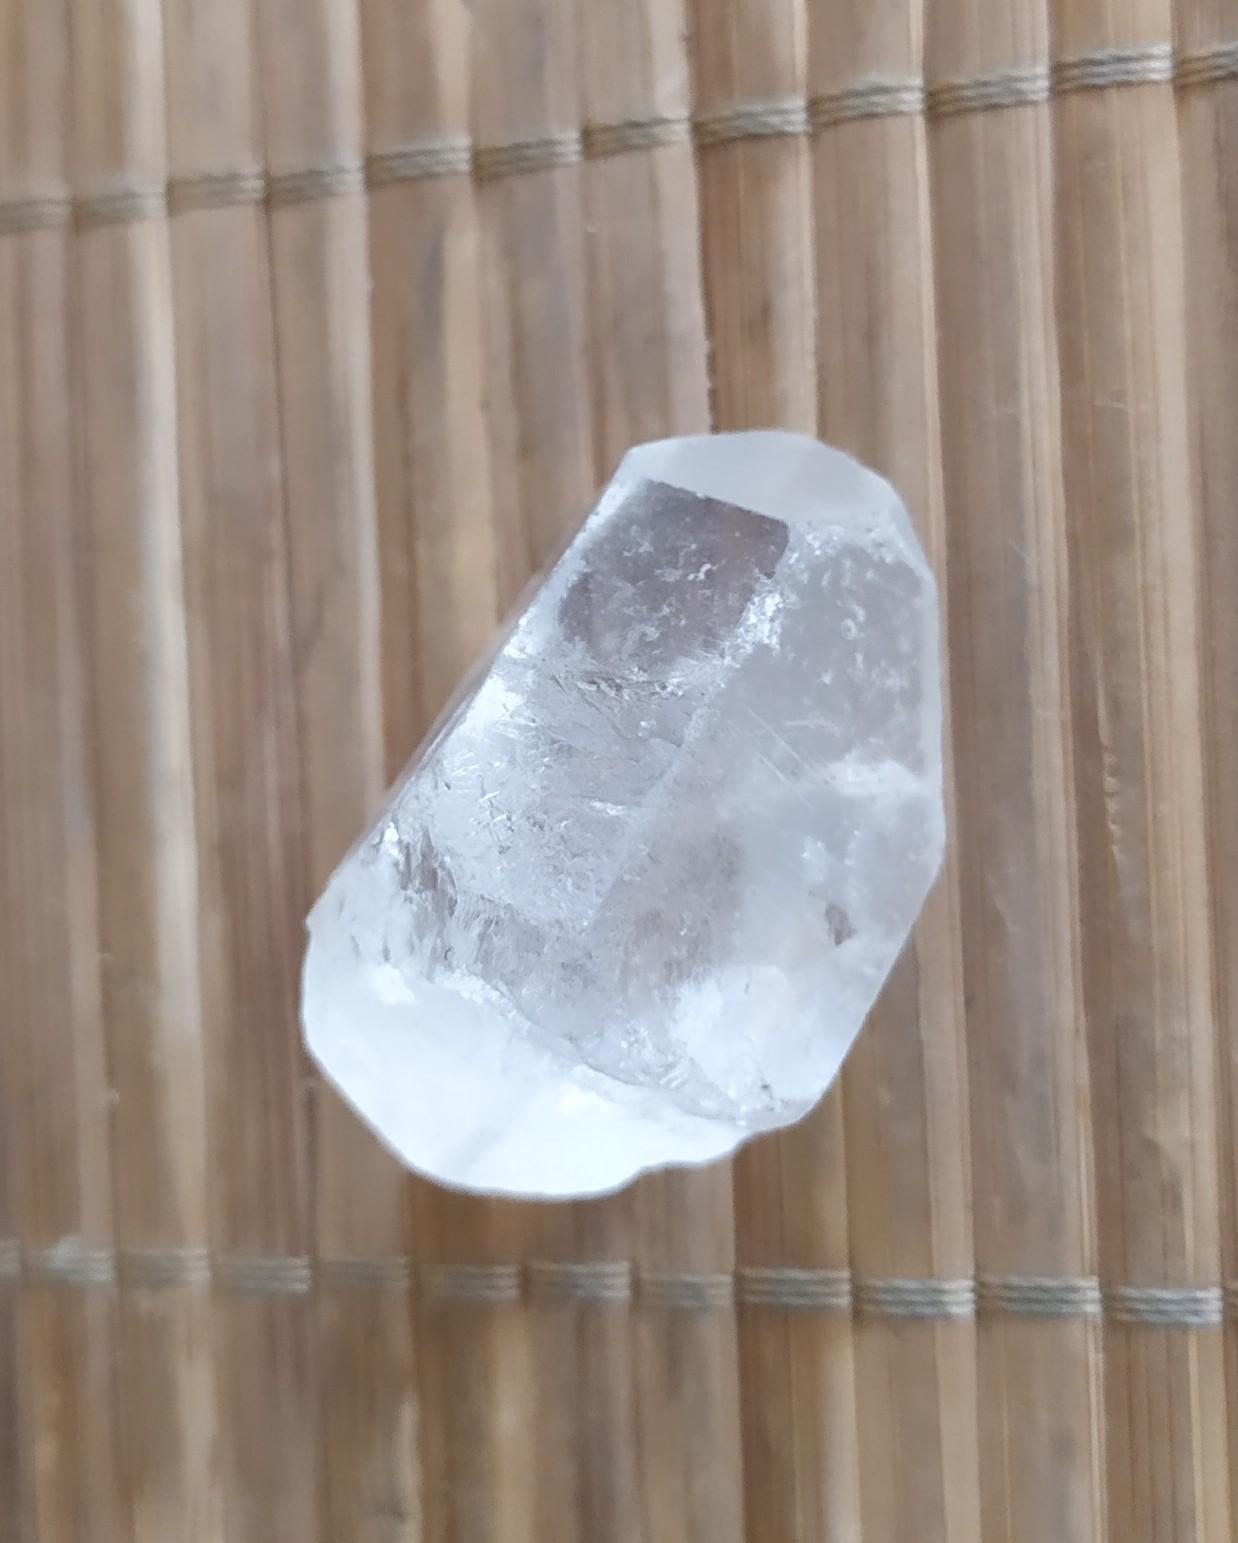 Pointe de cristal de roche